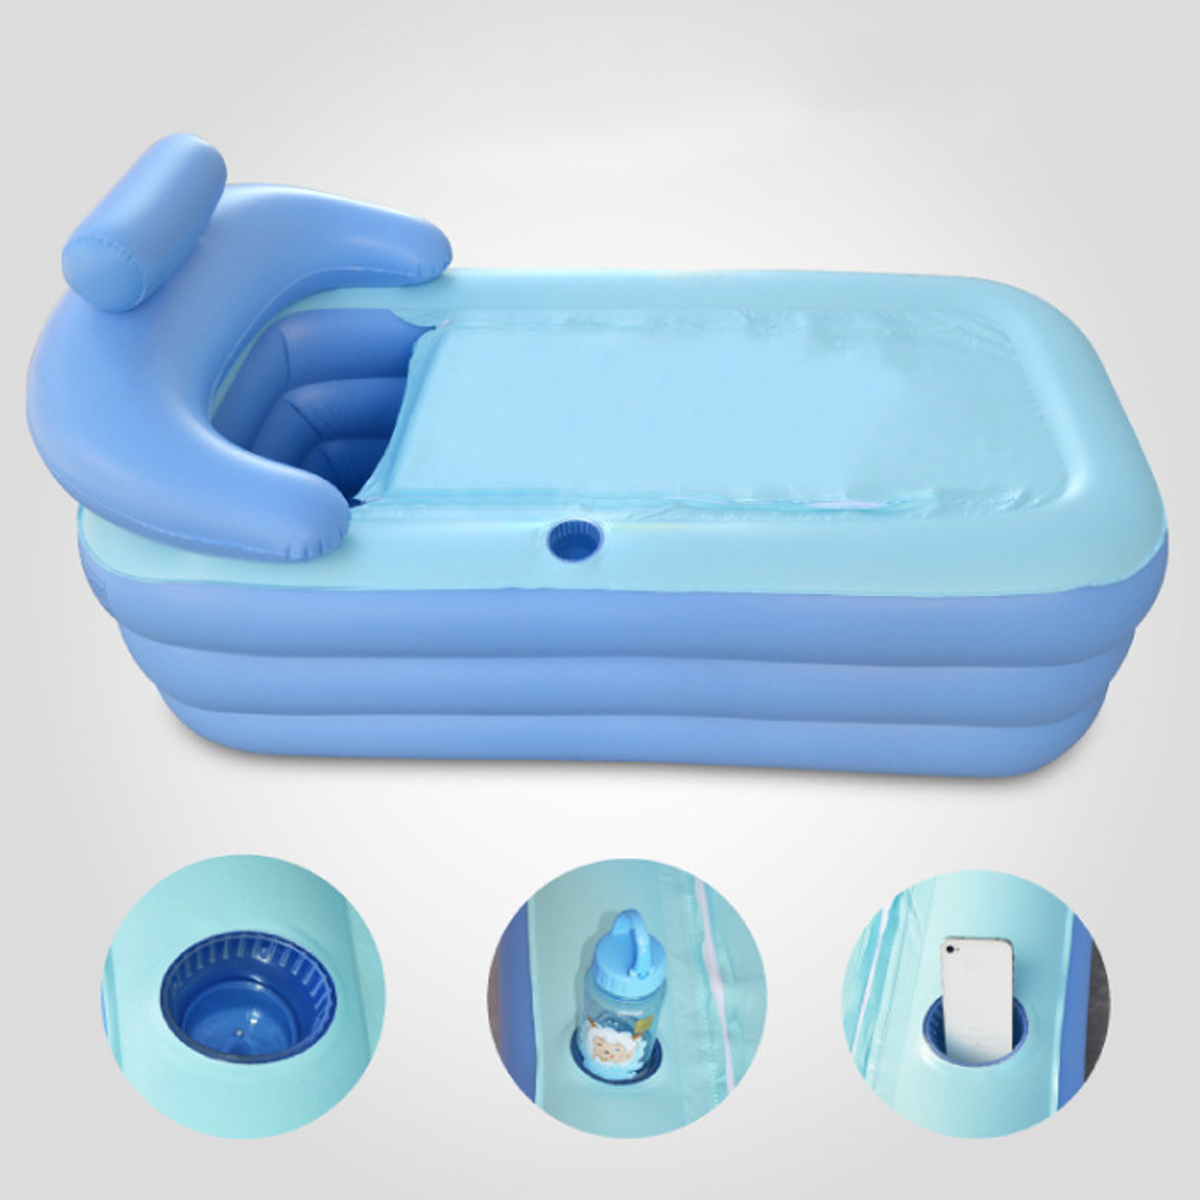 Foldable-Inflatable-Bathtub-160x84x64cm-PVC-Adult--Bath-Tub-with-Air-Pump-1173190-3